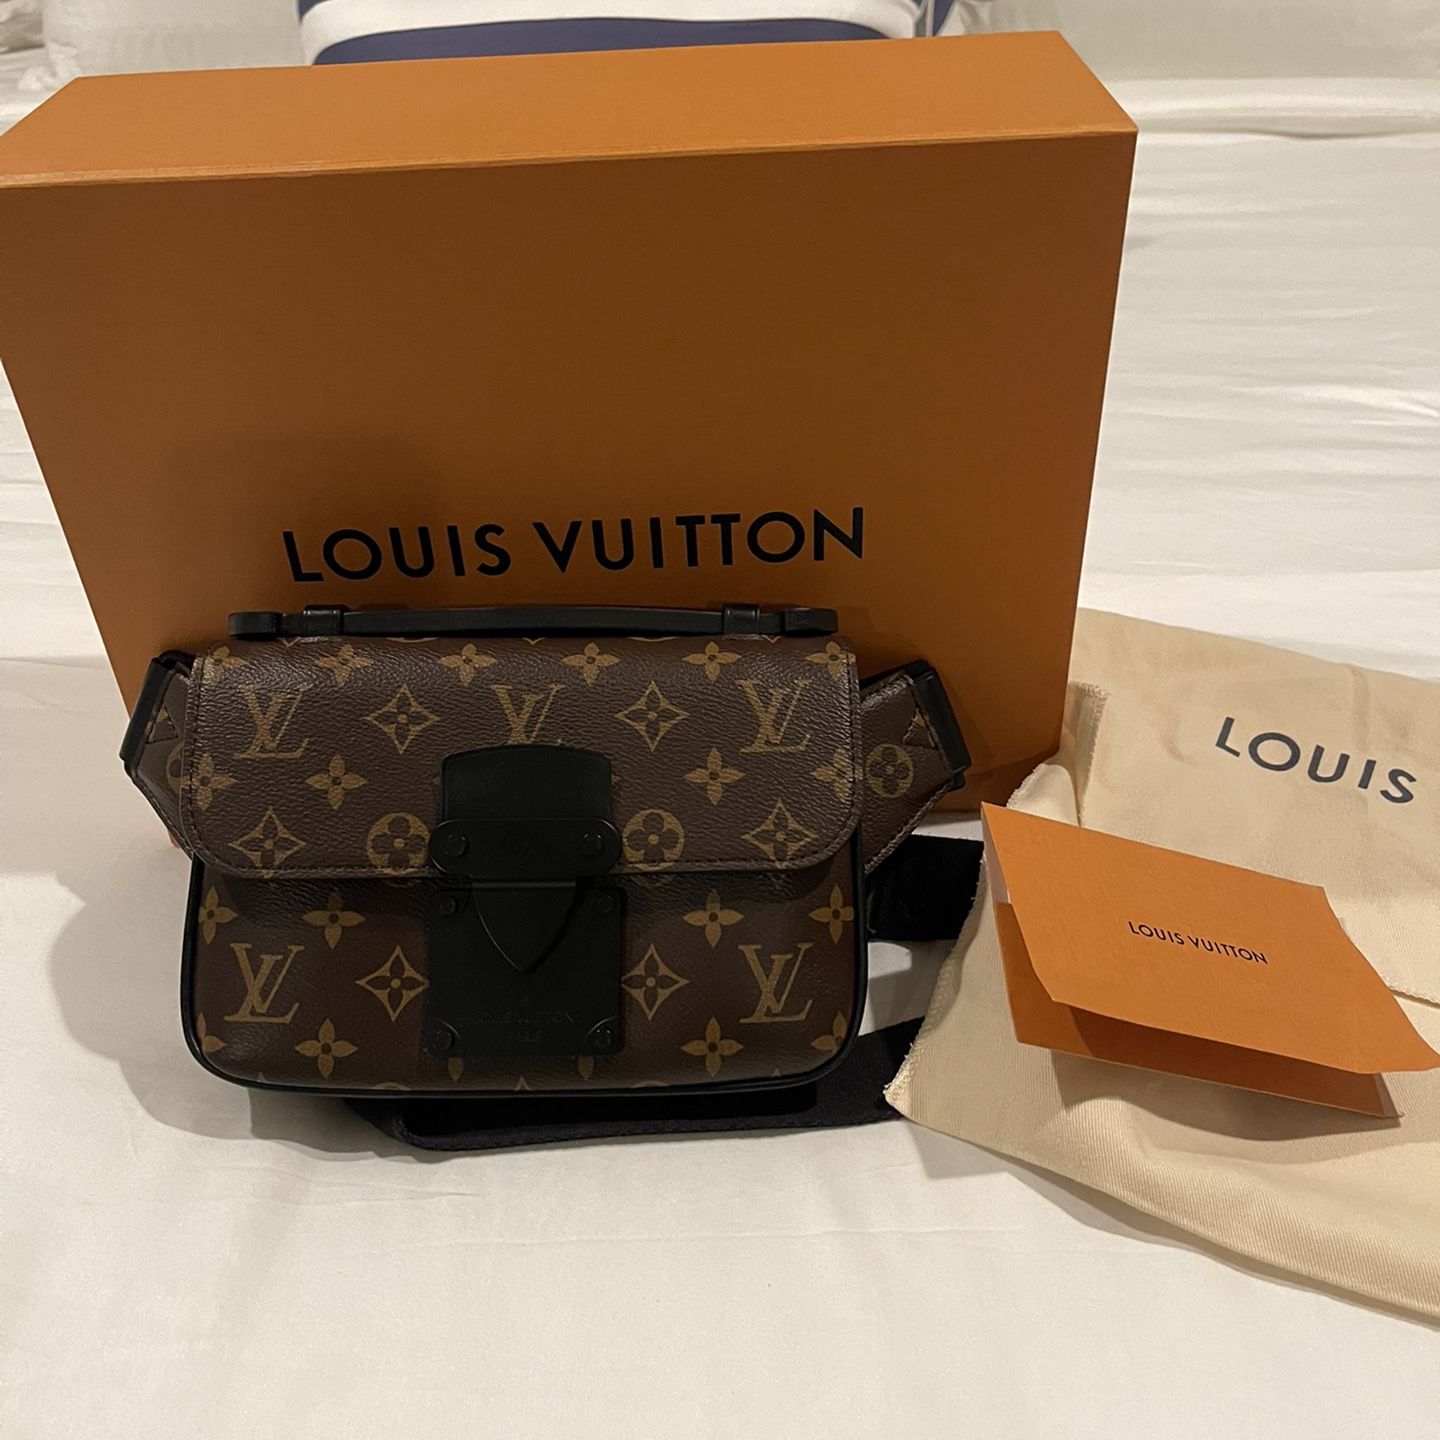 Louis Vuitton men’s cross body bag. PRICE REDUCTION 